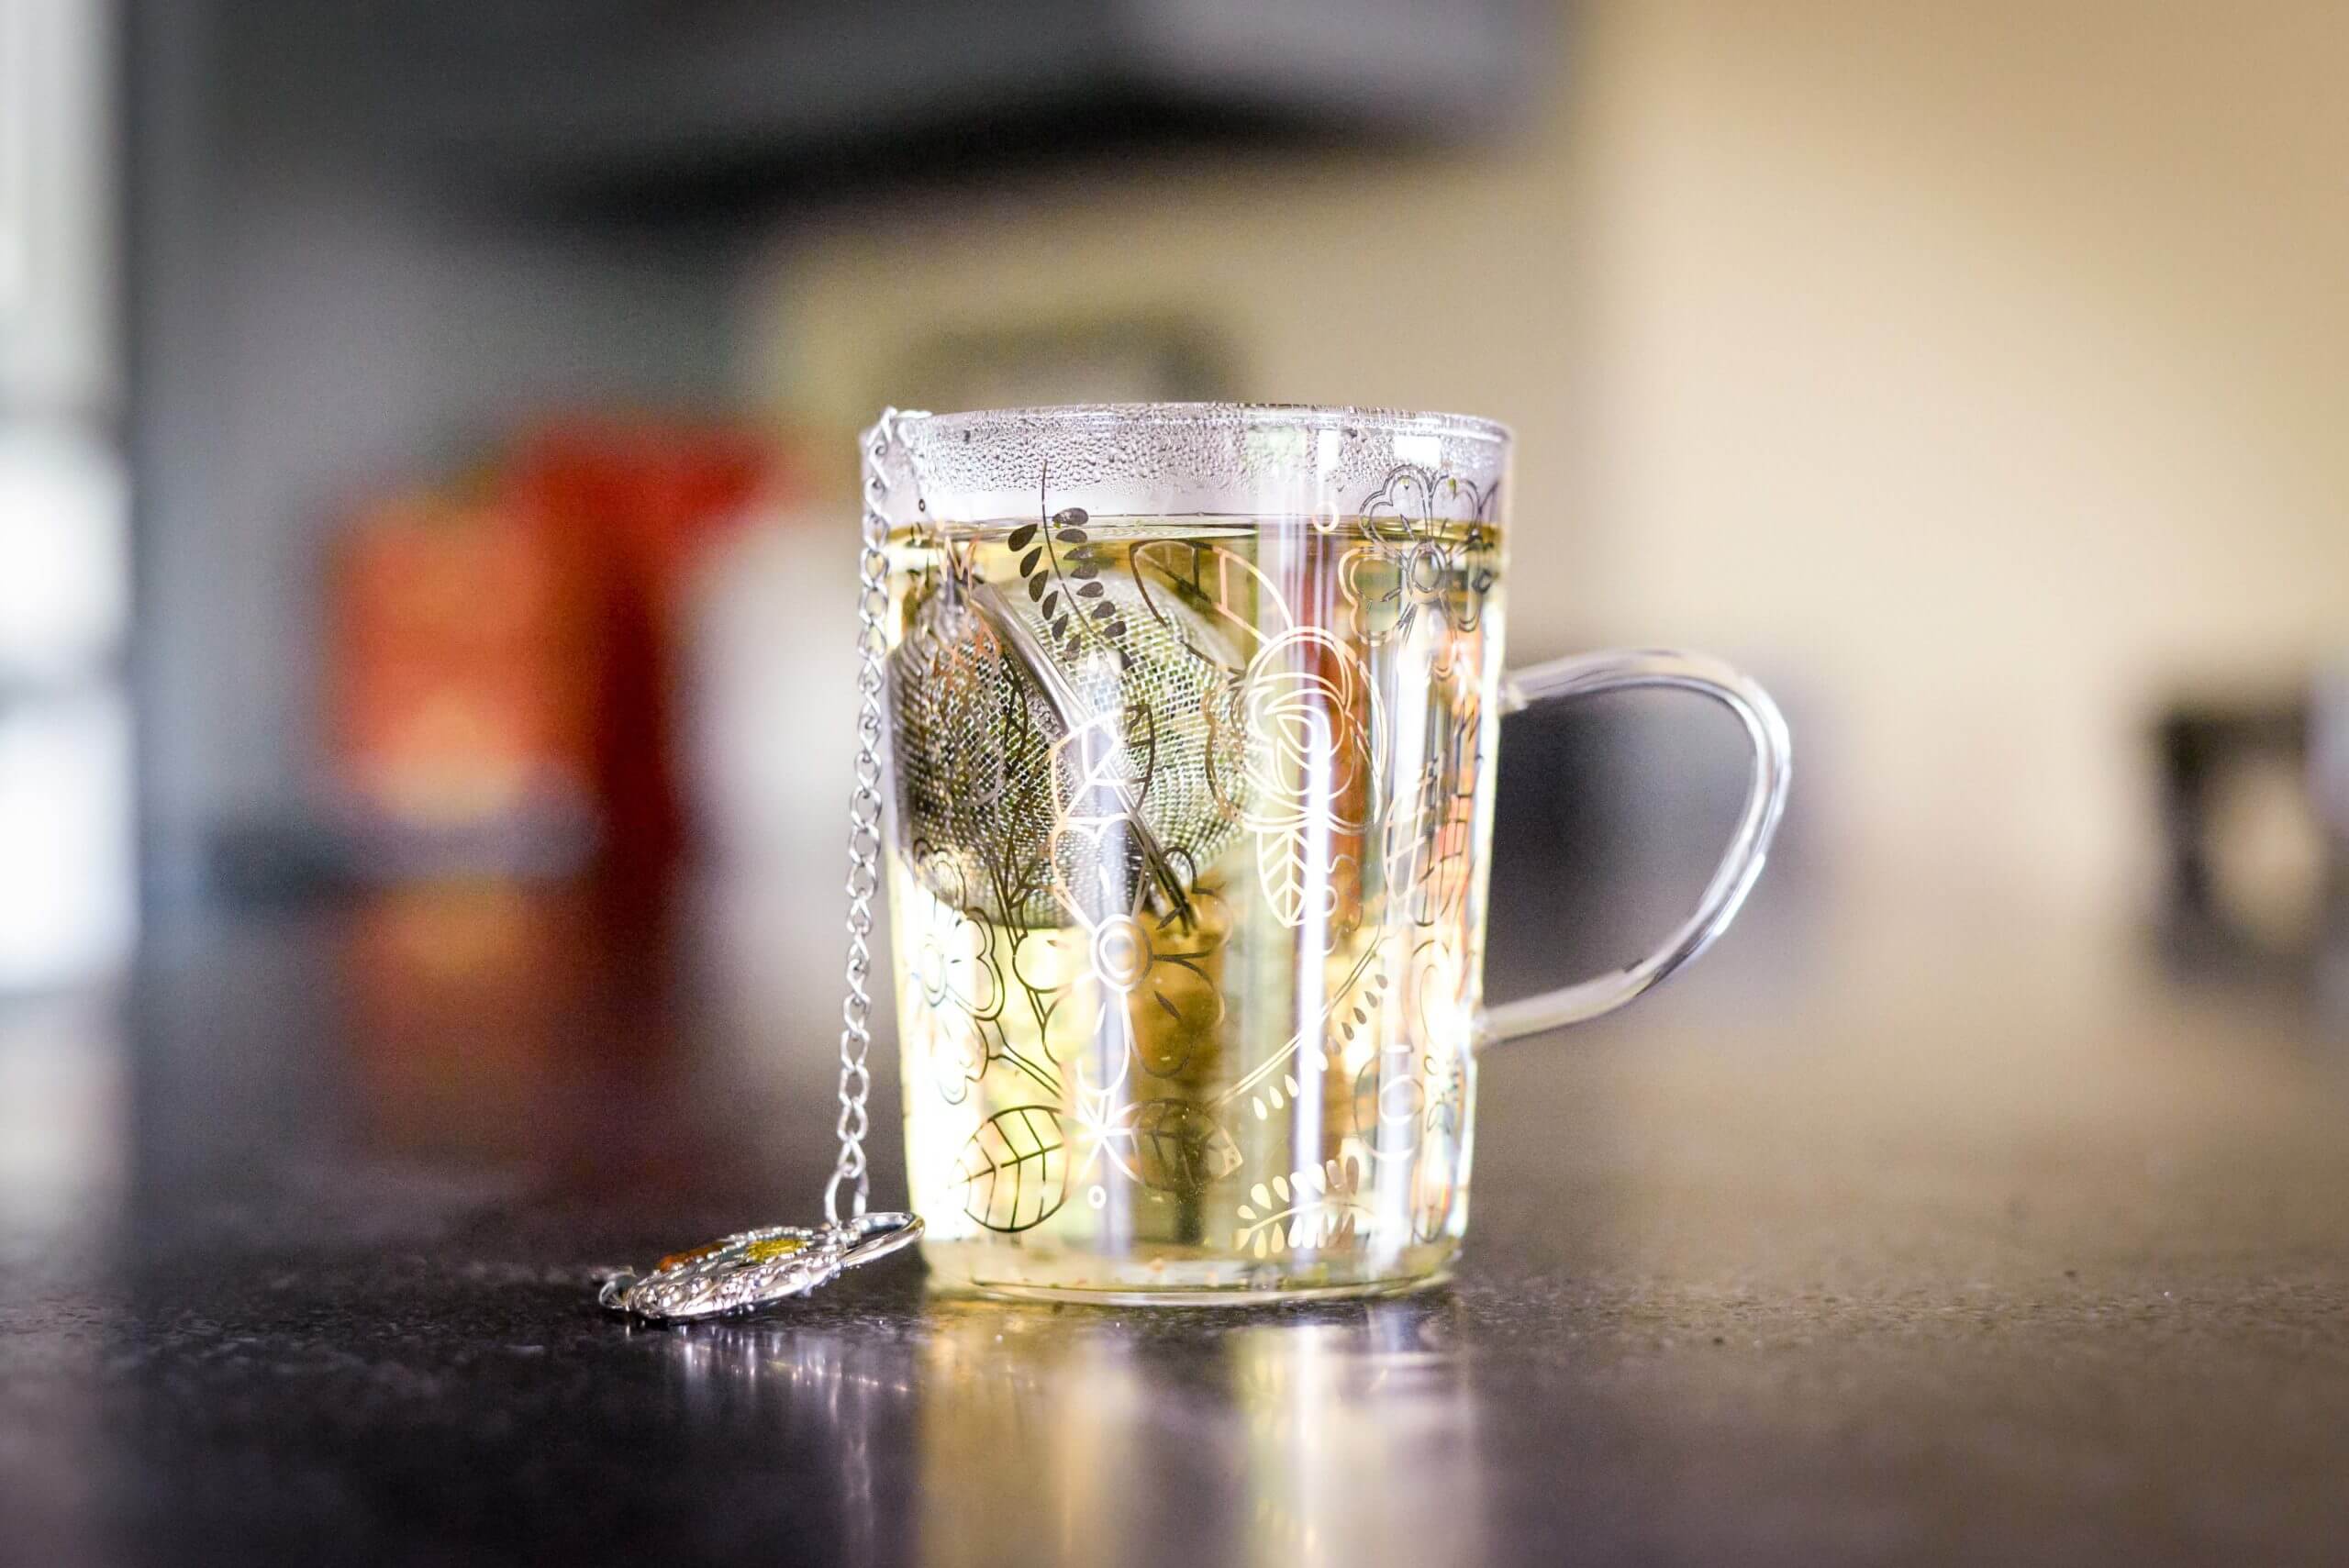 A mug of tea on a table.